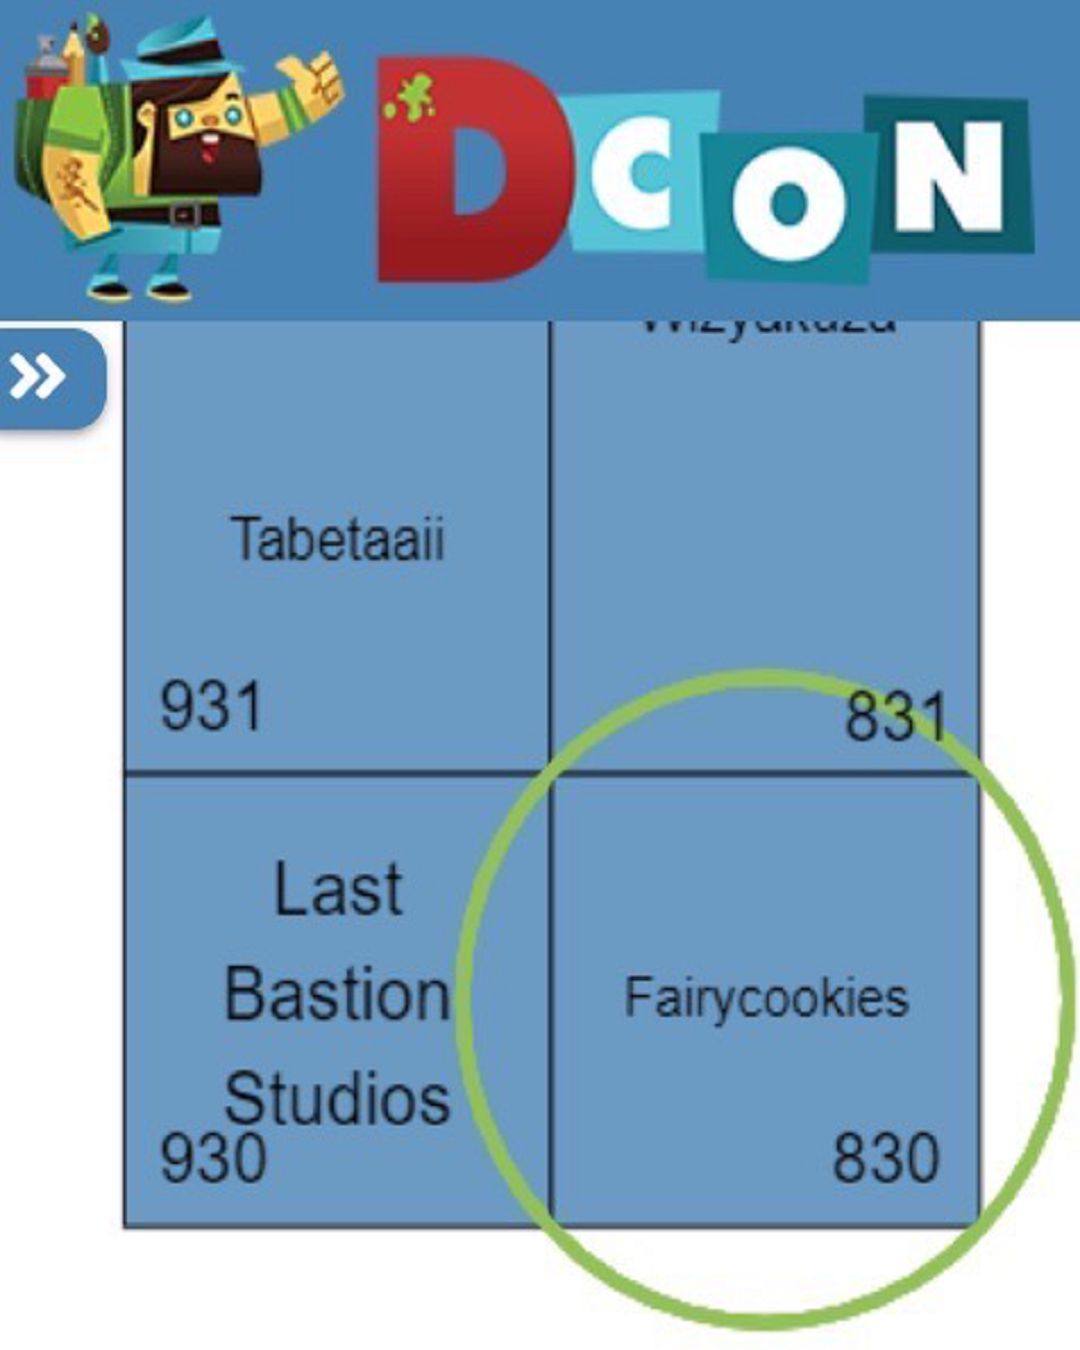 Fairycookies in Designercon 2022 booth:830